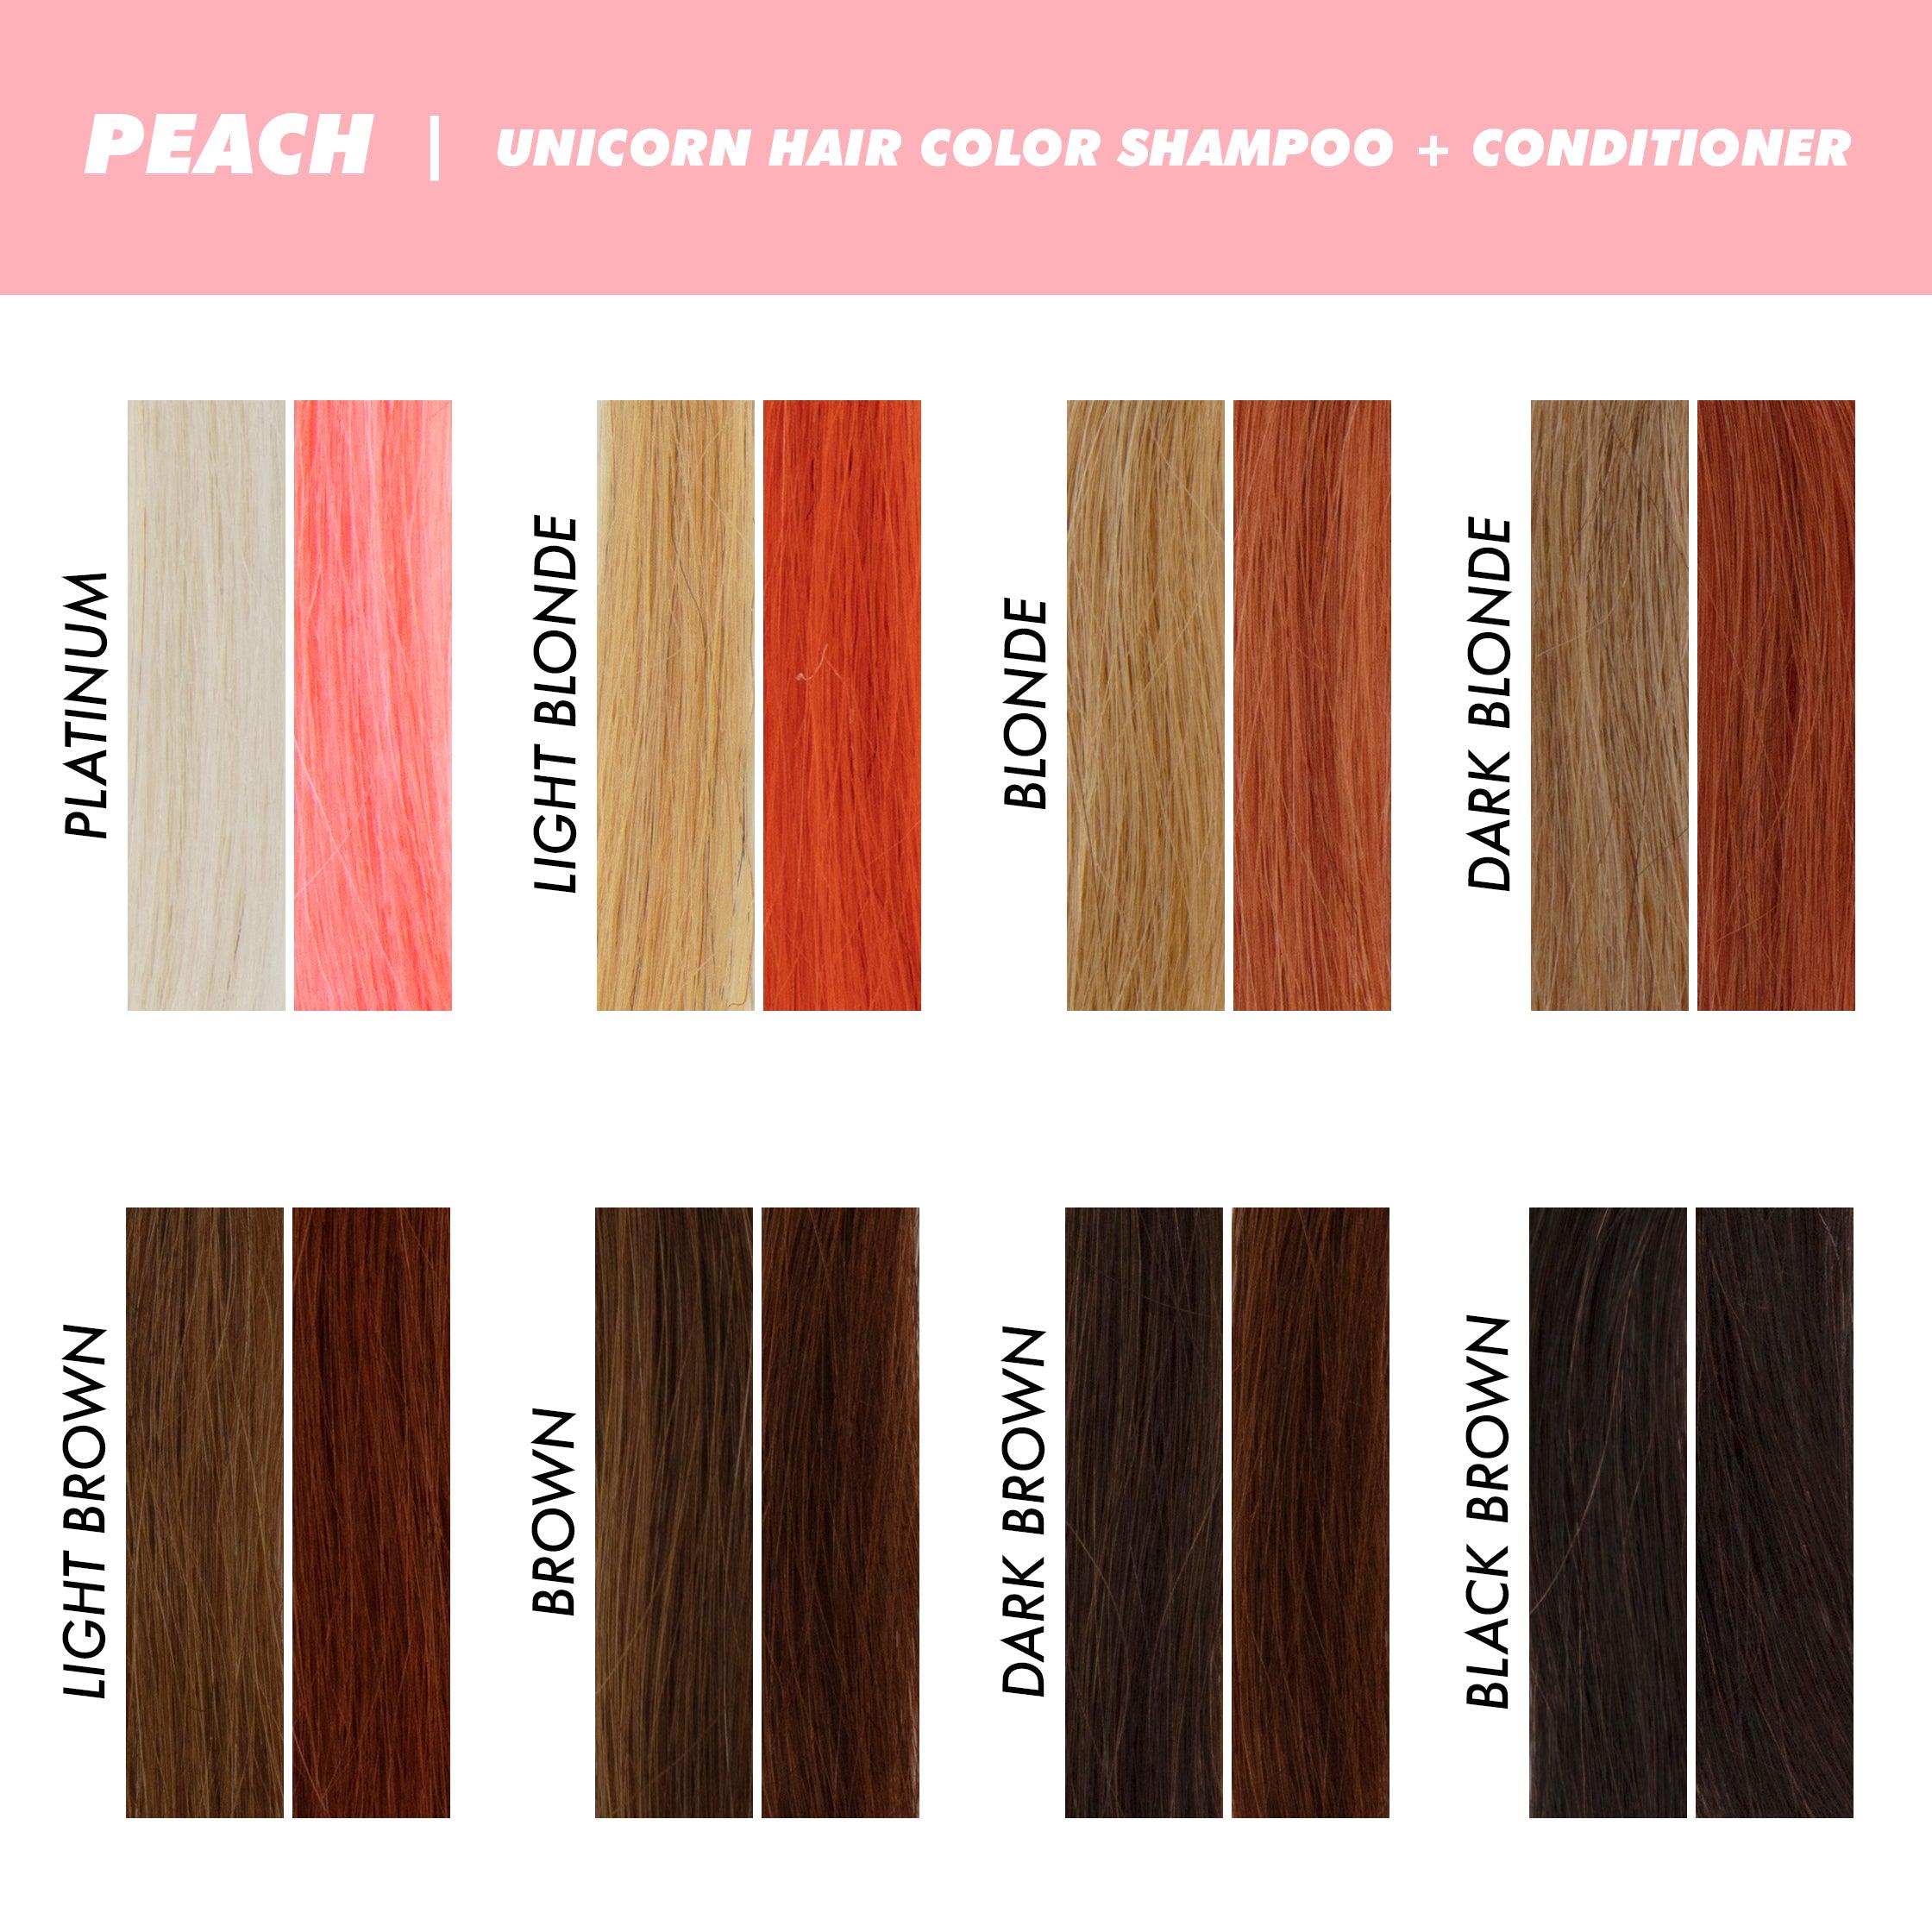 Unicorn Hair Color Conditioner  variant:Peach